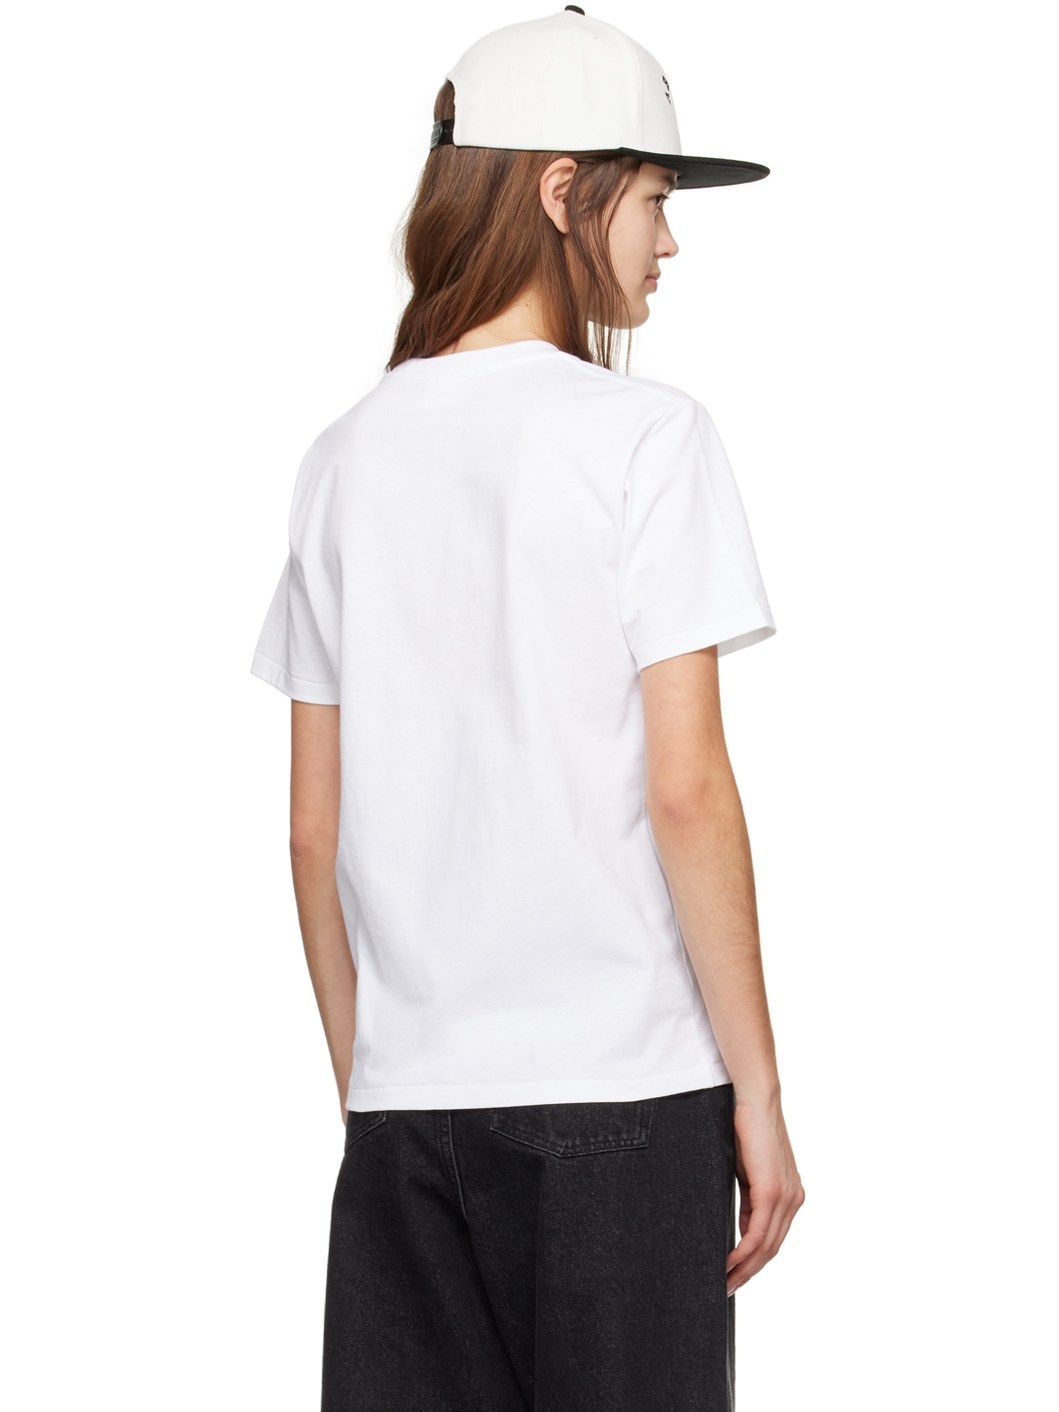 White Liquid Camo College T-Shirt - 3